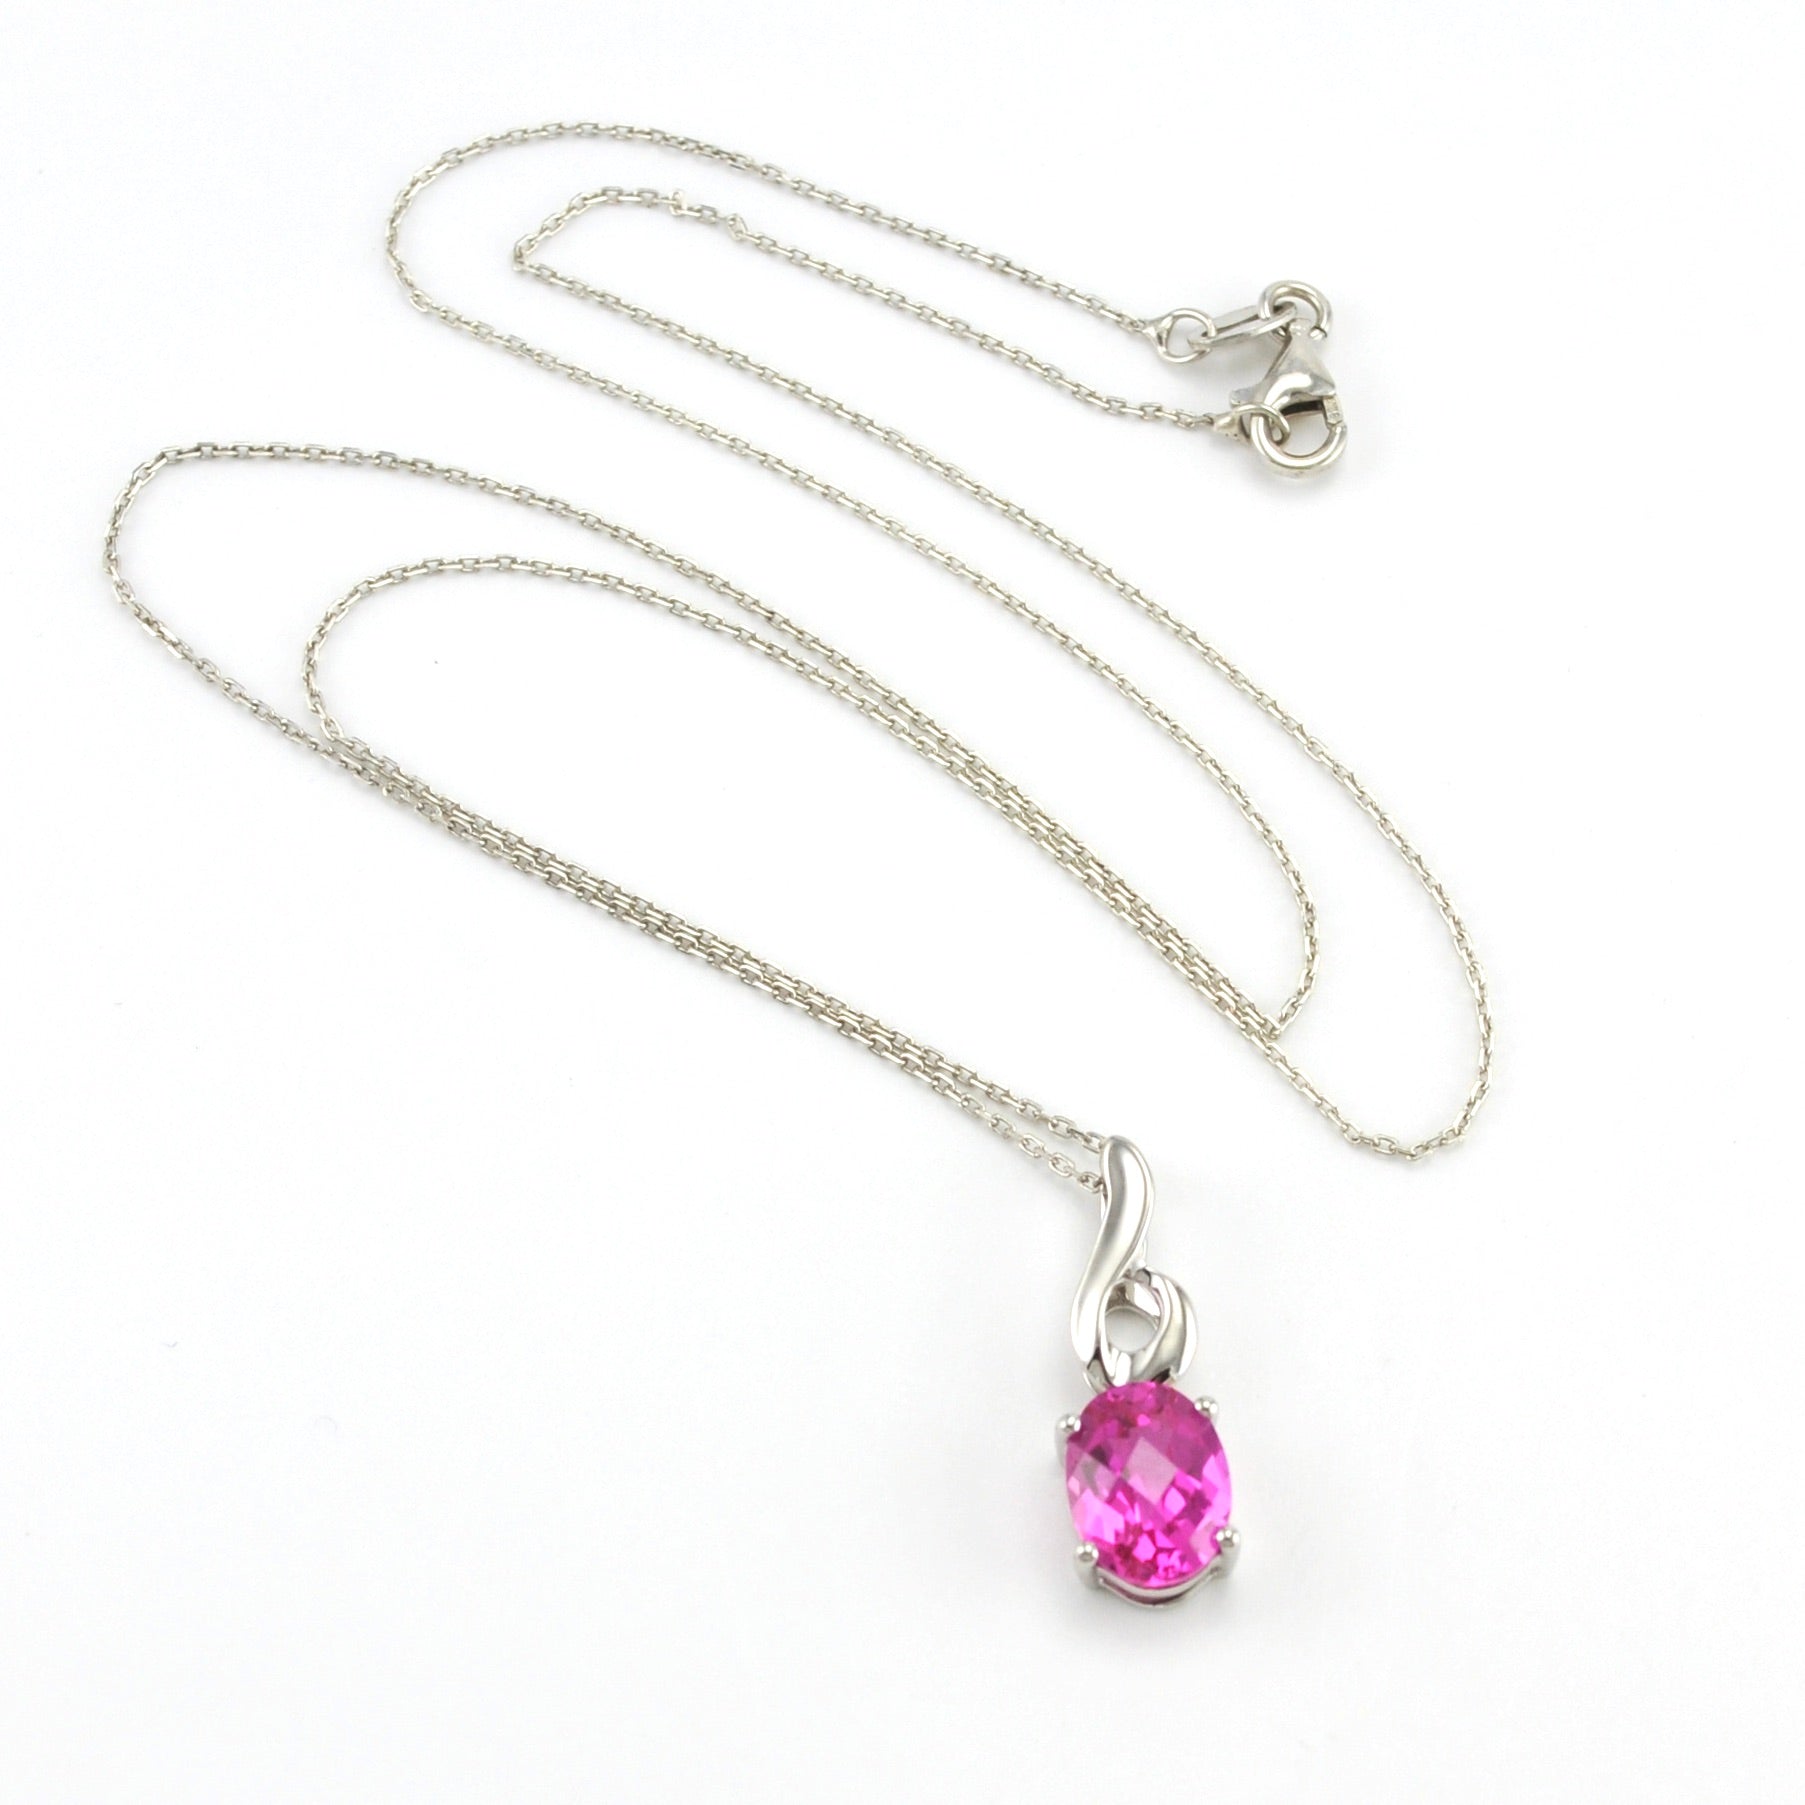 oval pink sapphire pendant